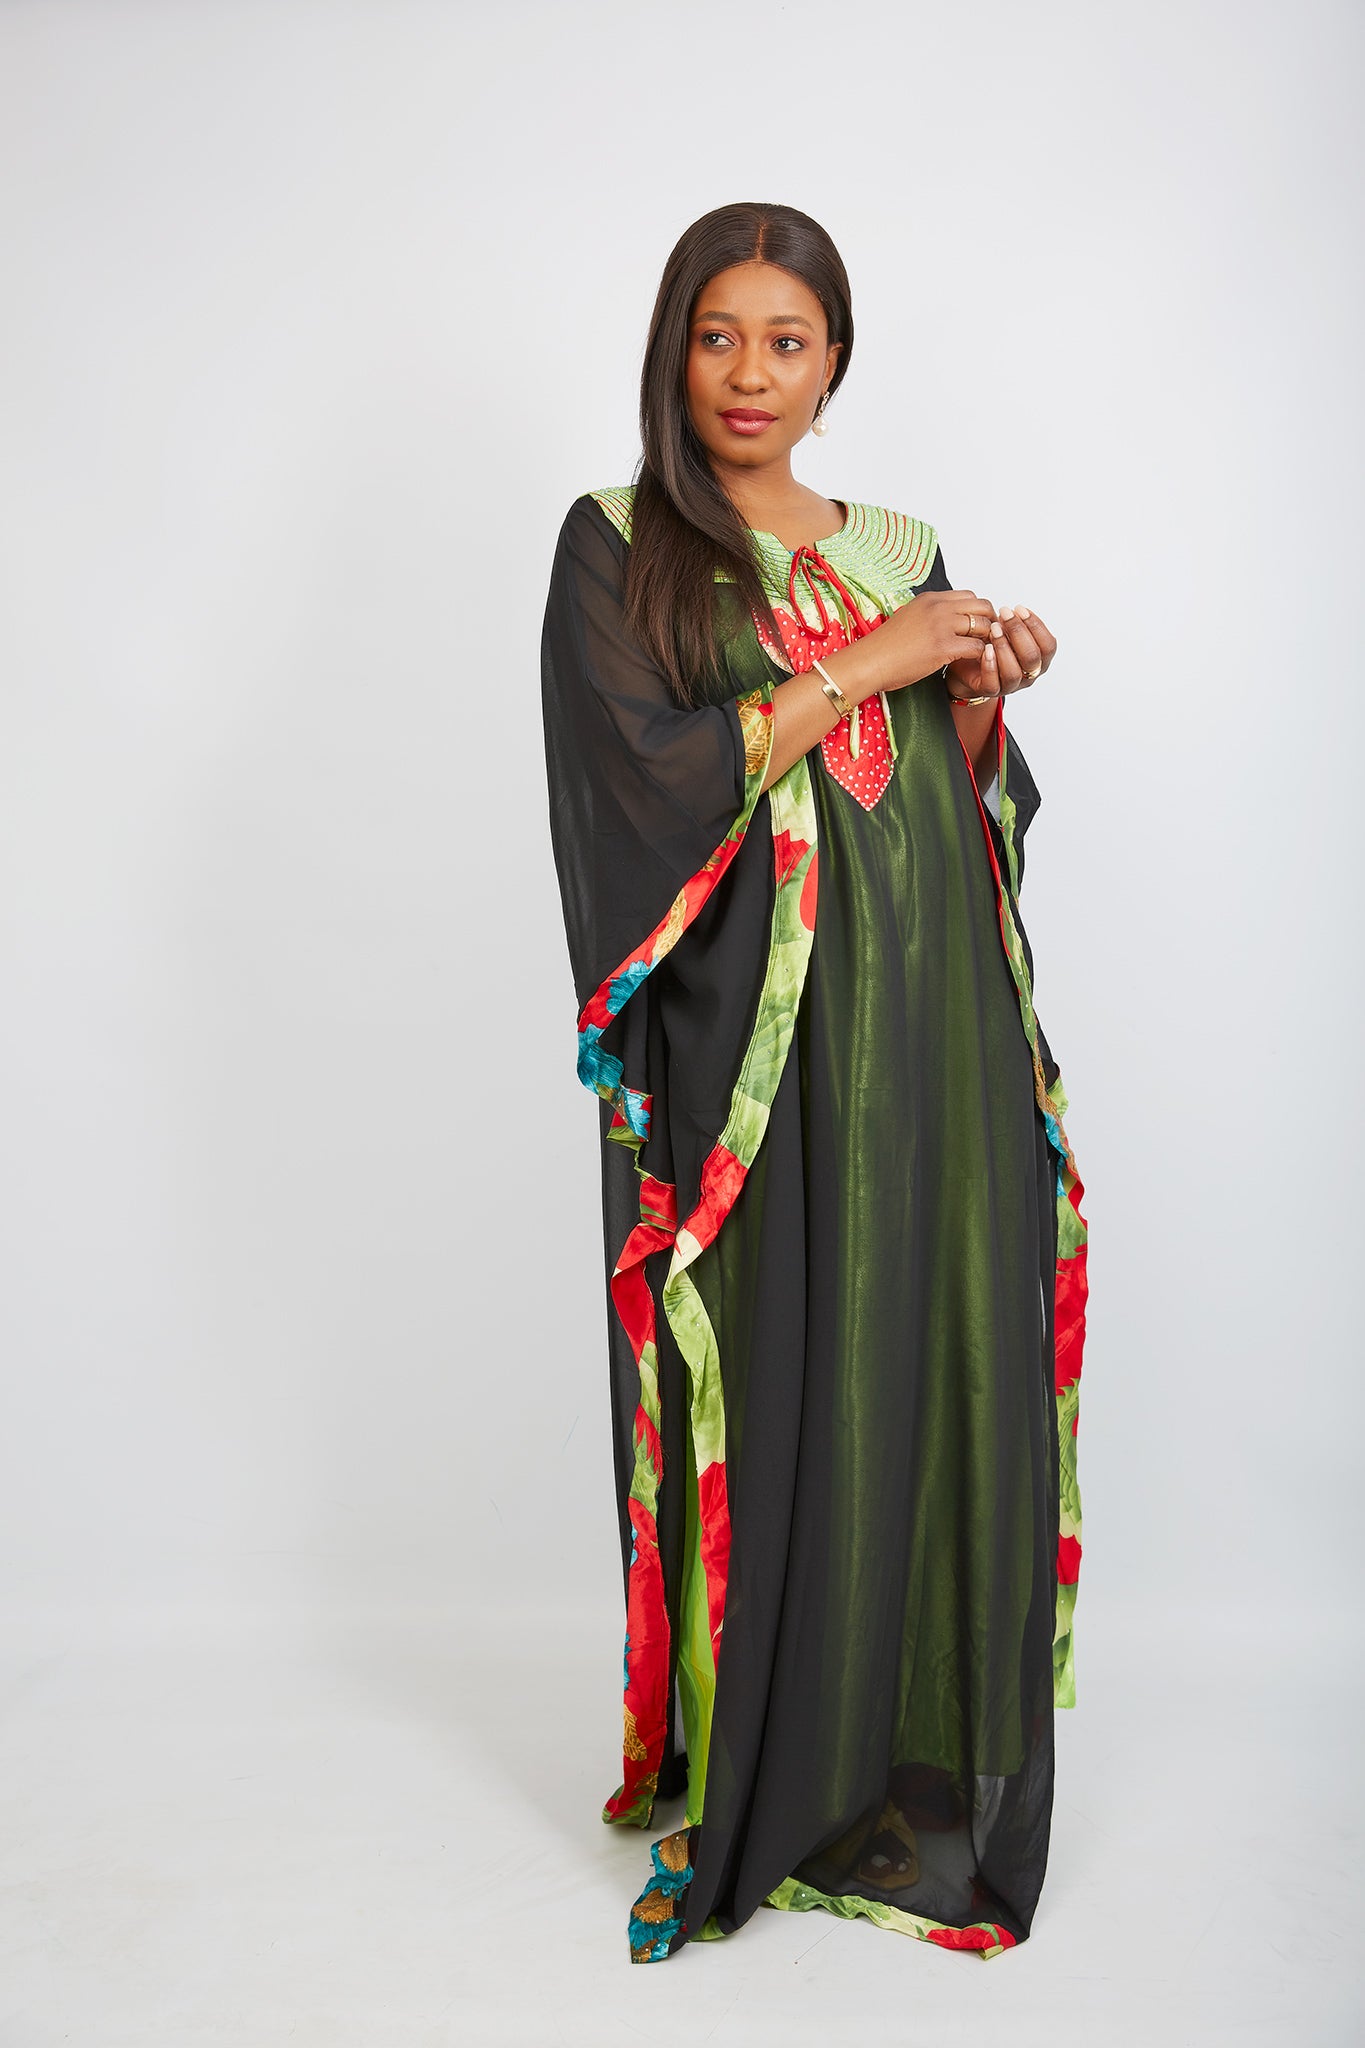 MODSGUE Kaftan Women's Long Muslim Thermal Shirt Full Length Dressing Gown  Vintage Party Dresses Islamic Leisure Suit Long Sleeve Robe Bronzing Prayer  Clothing, beige, S : Amazon.co.uk: Musical Instruments & DJ